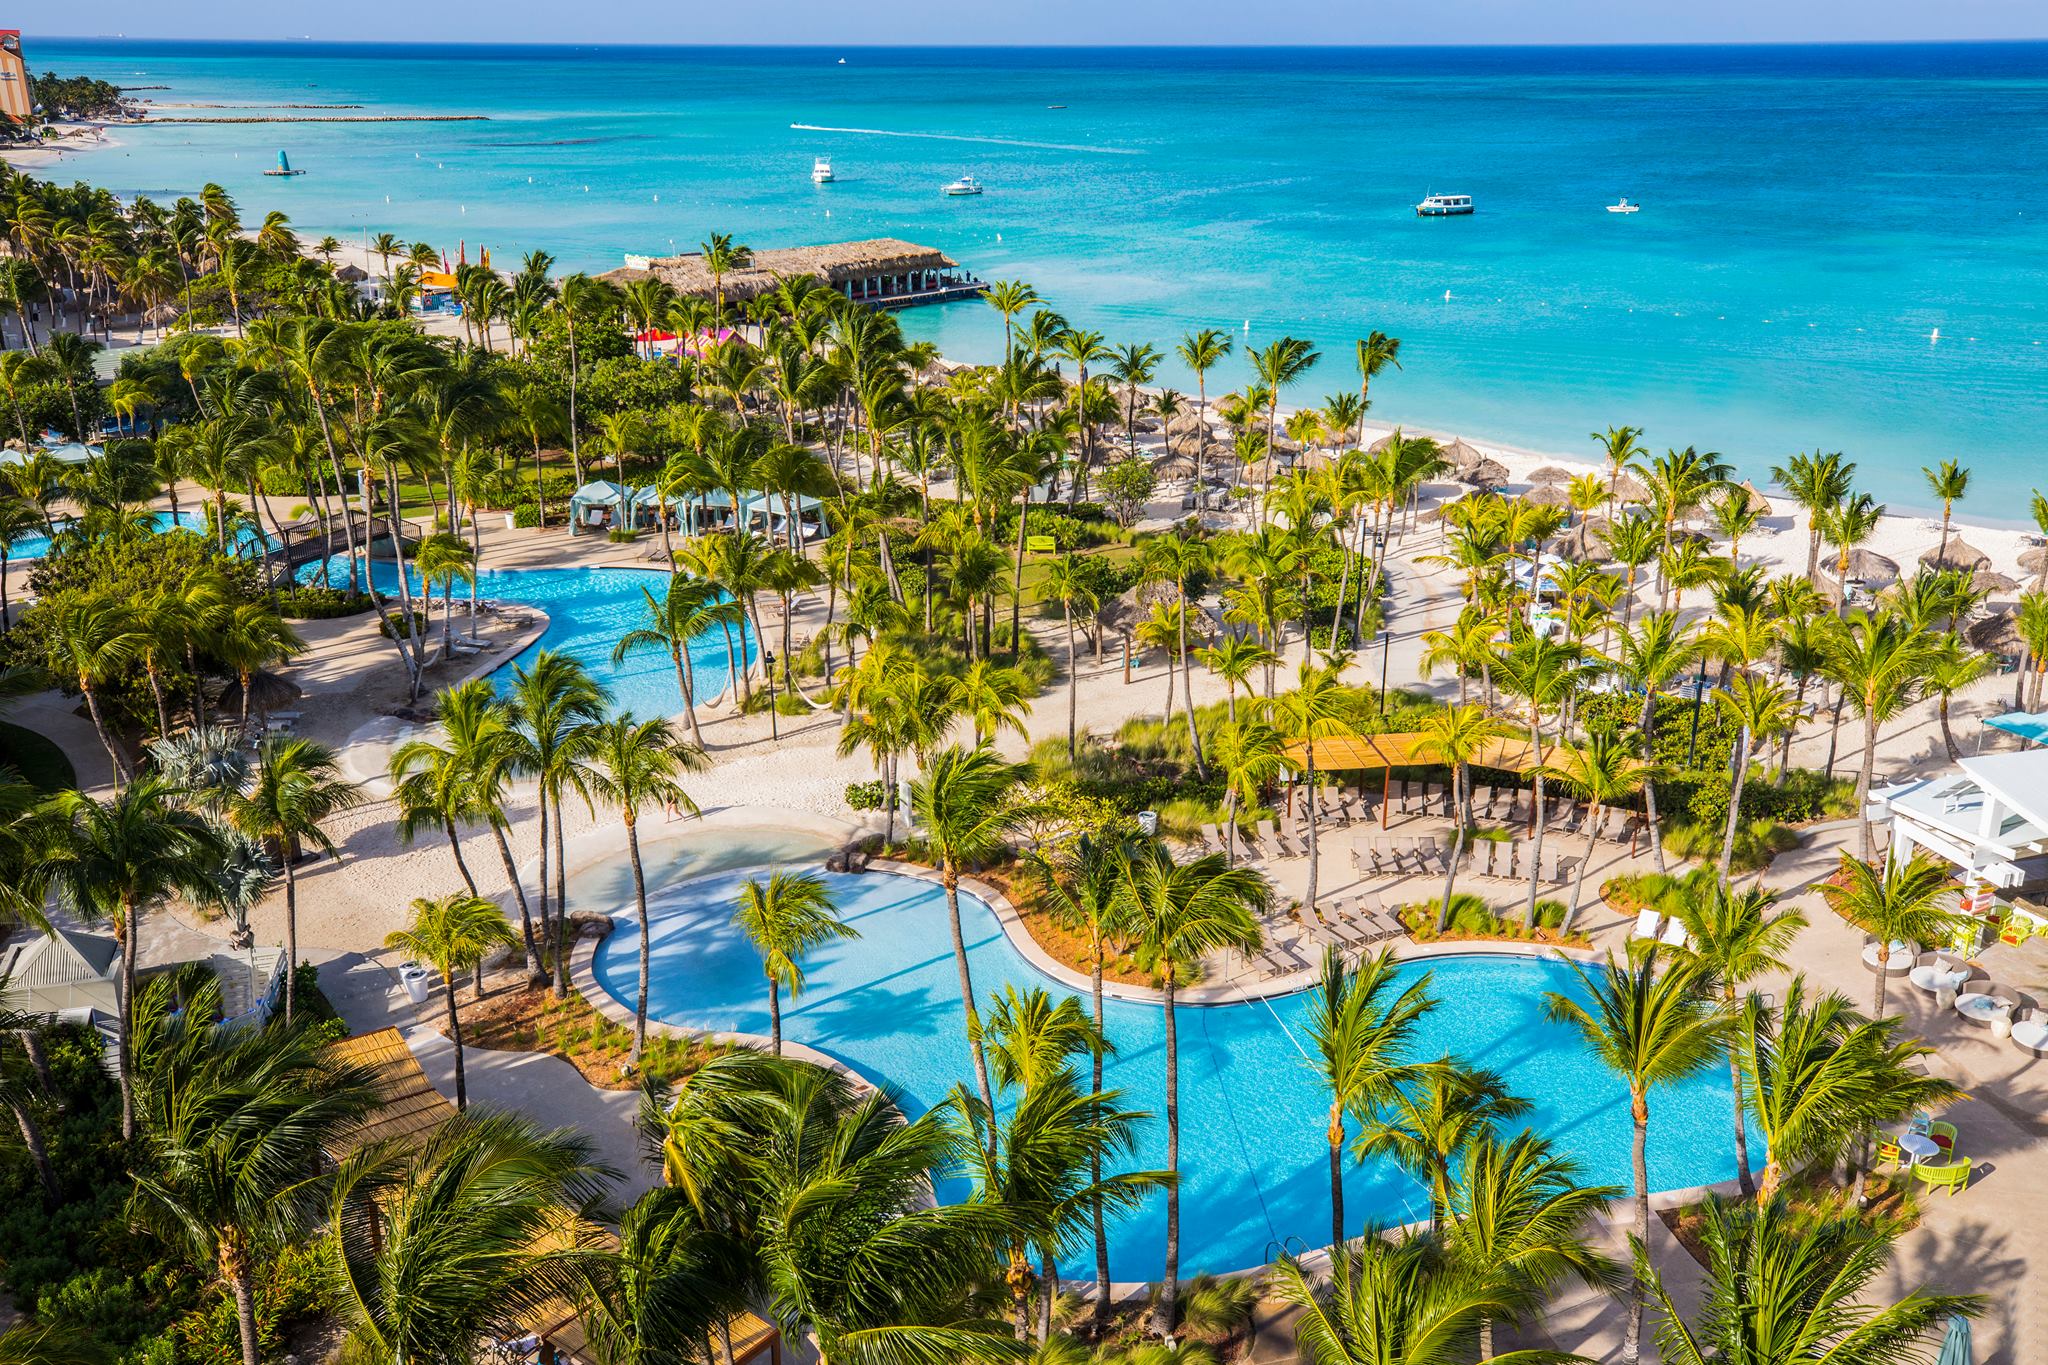 Hilton Aruba Caribbean Resort & Casino Beach and Pool Area